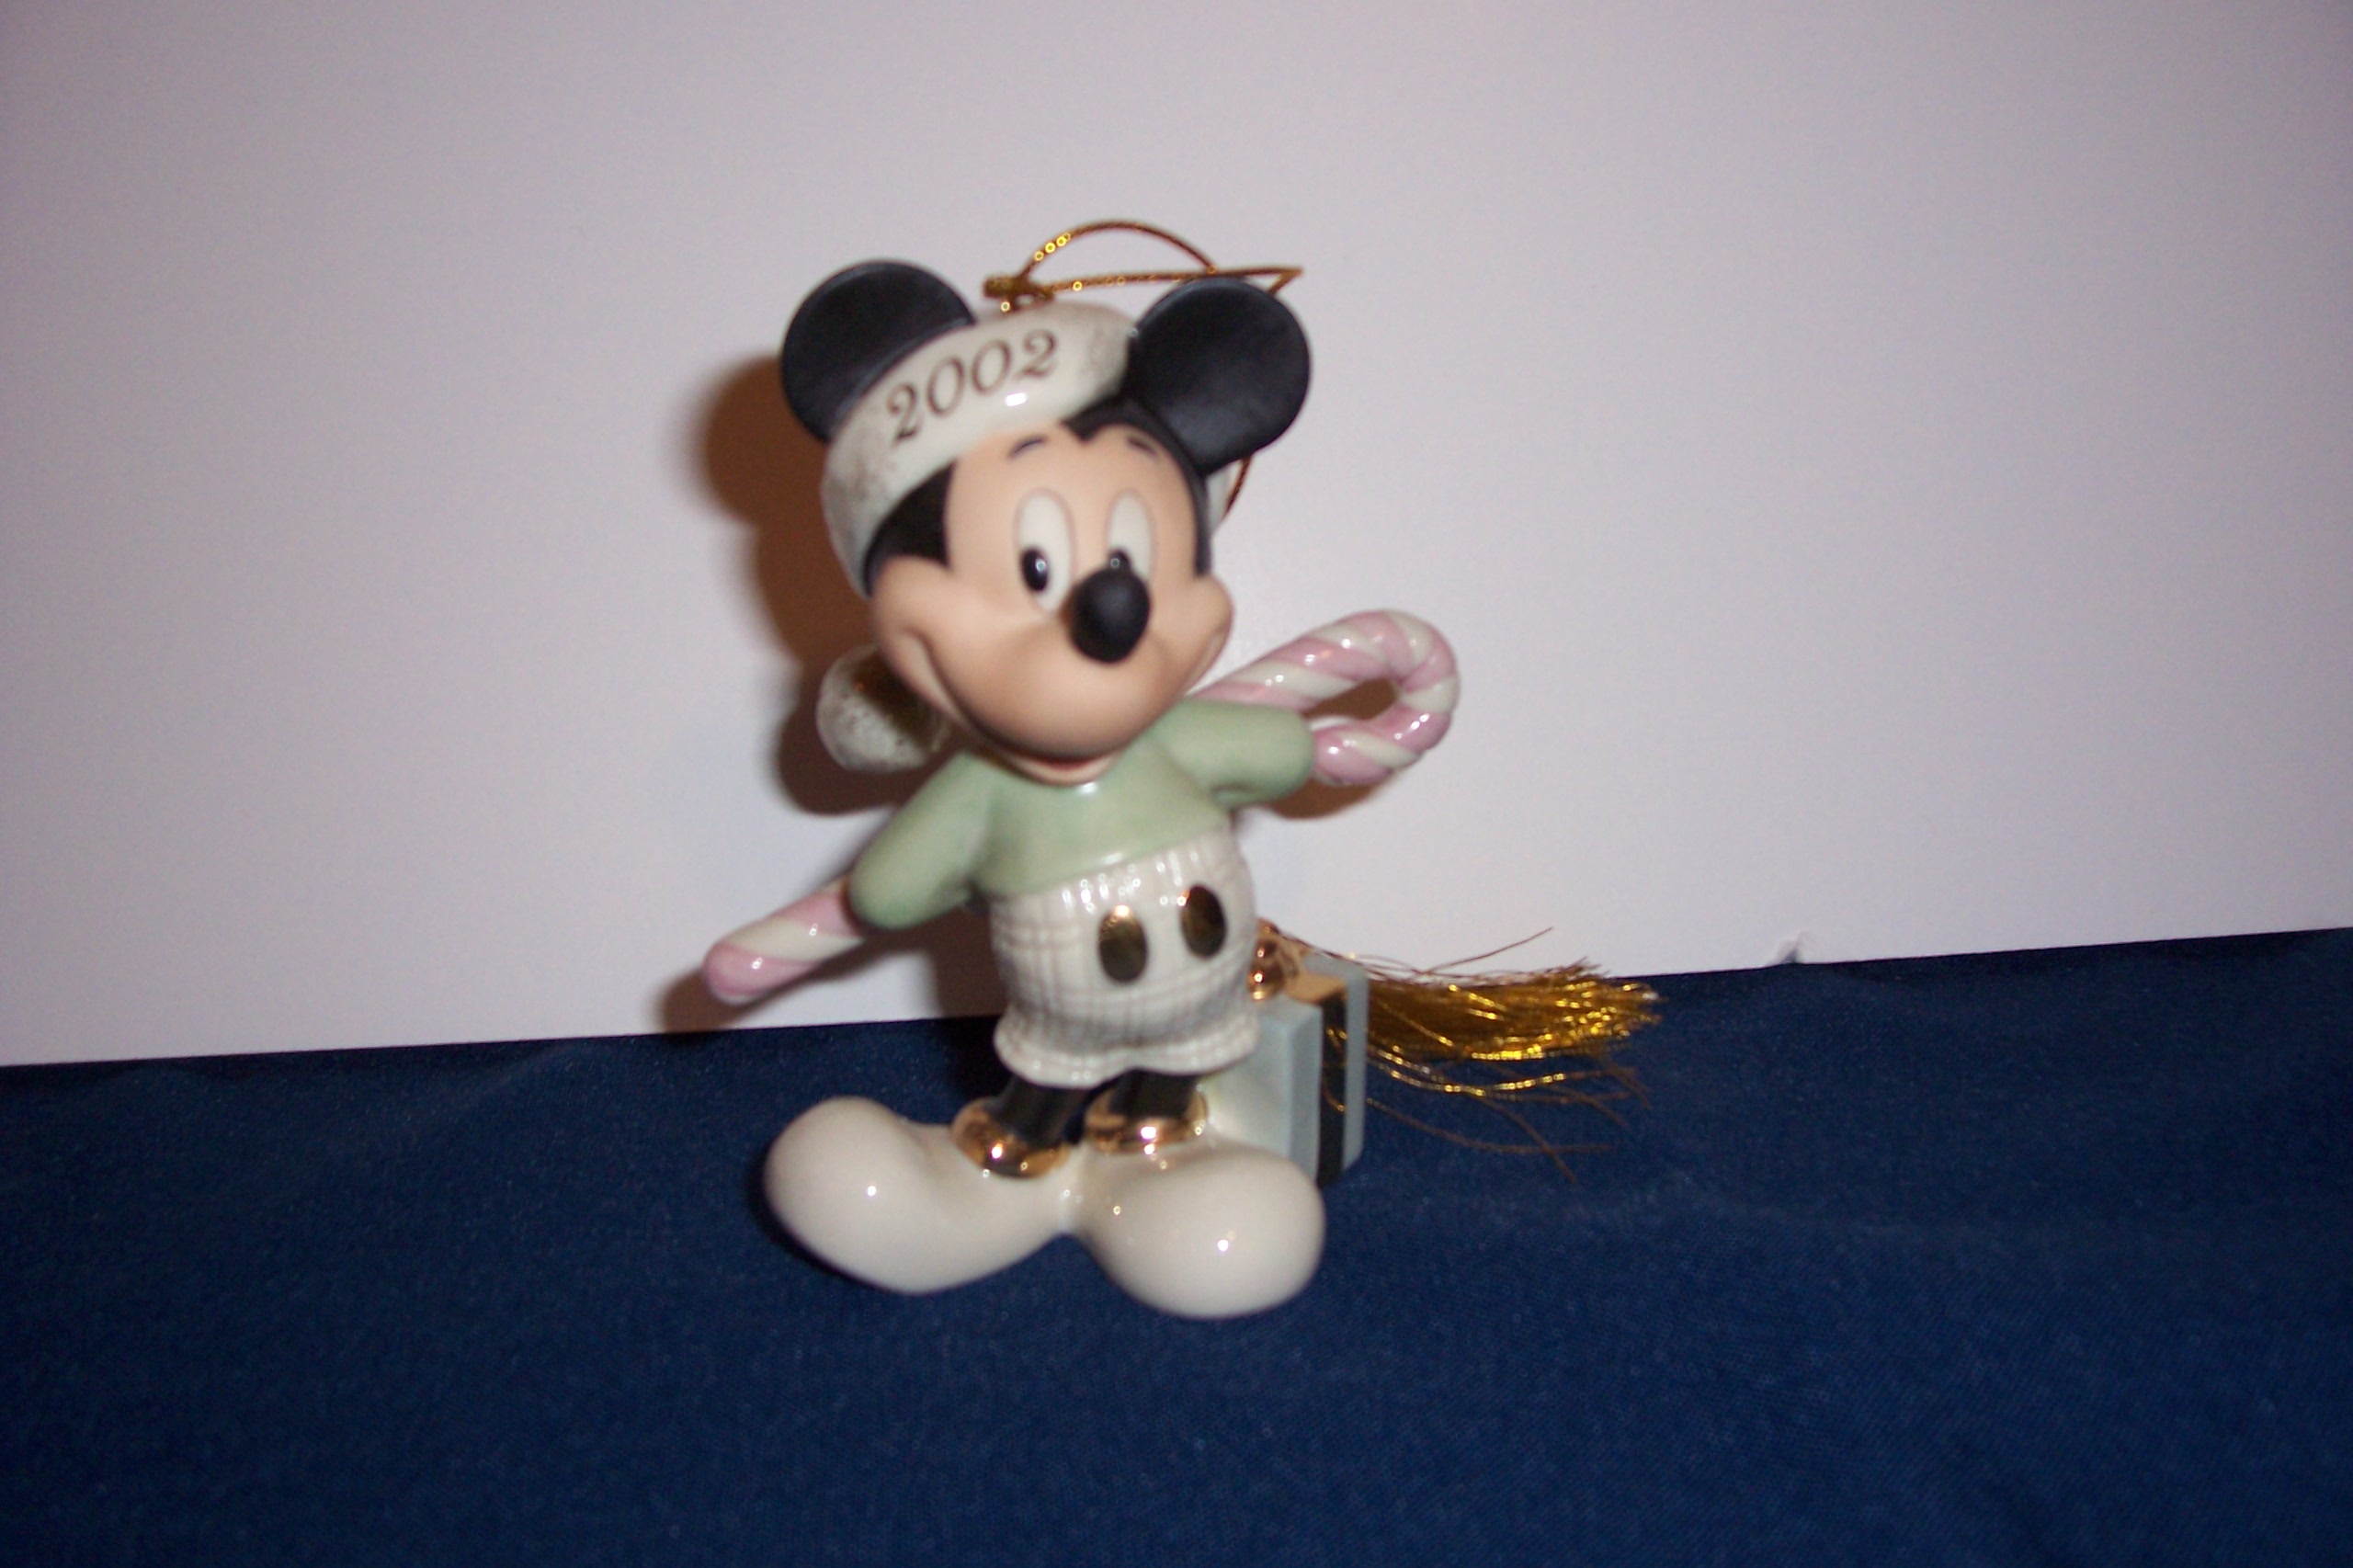 Disney Lenox 2002 Mickey Mouse ornament